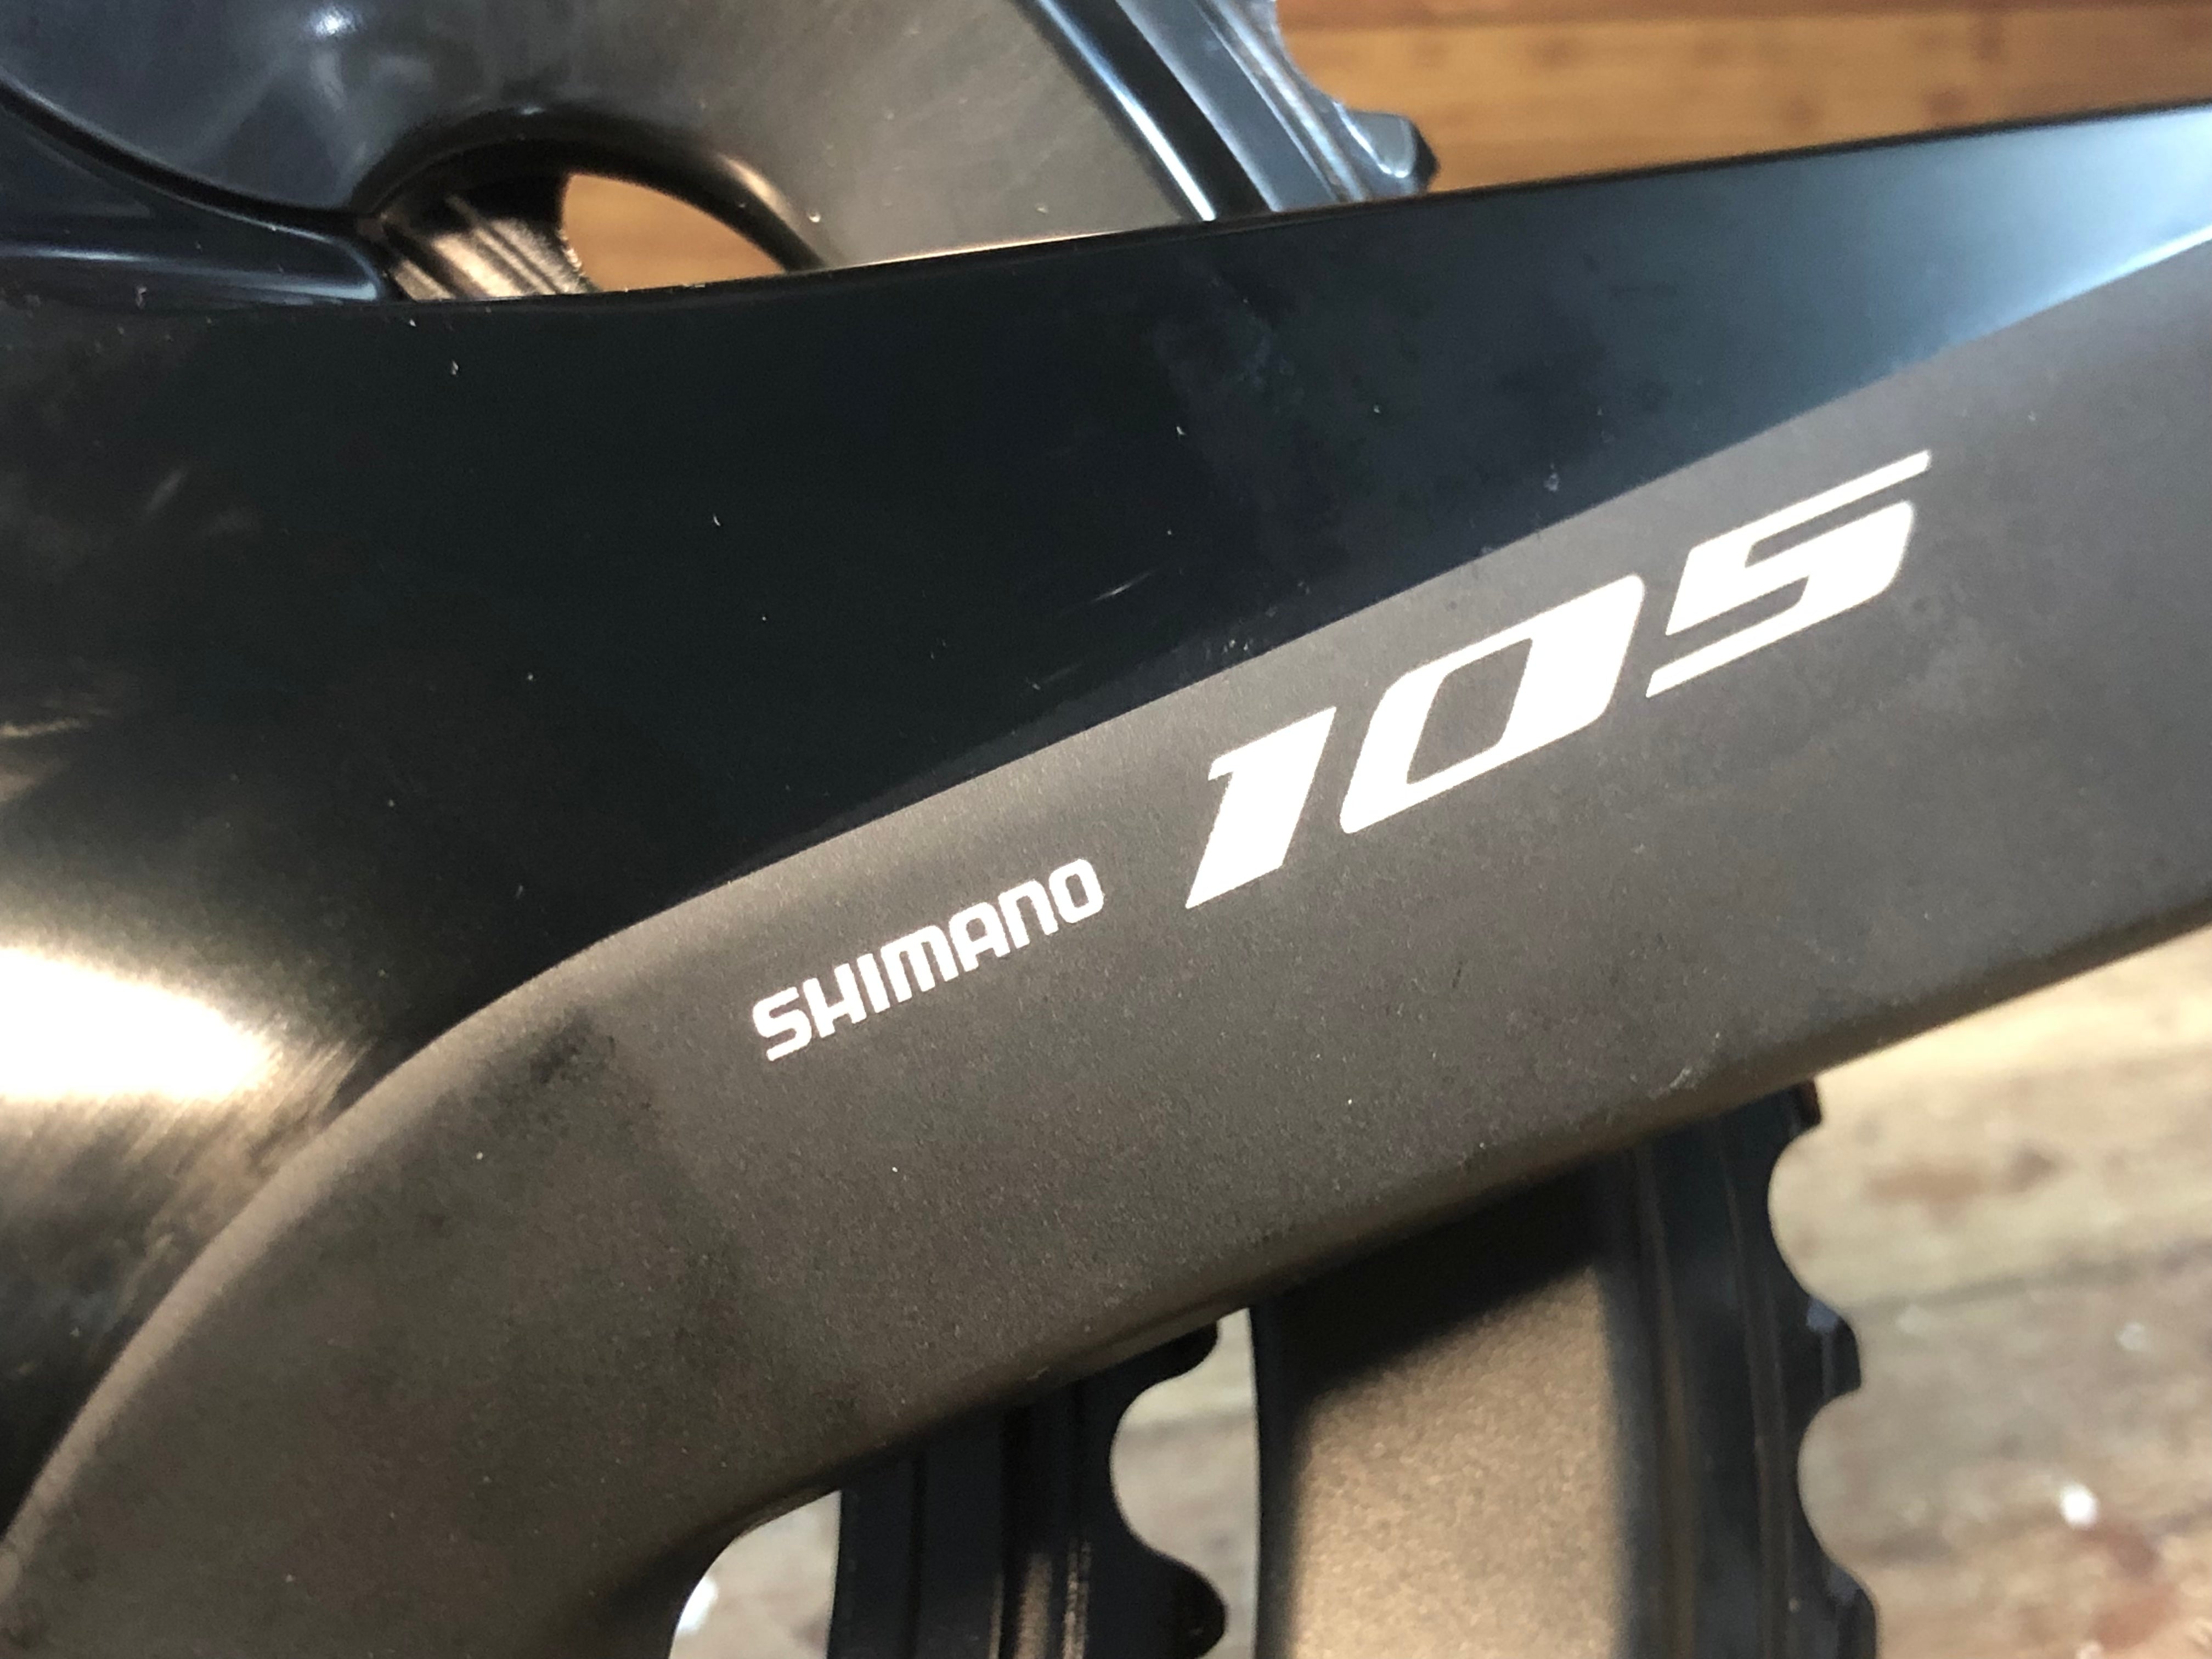 GU604 シマノ SHIMANO 105 FC-R7000 クランクセット172.5mm 50-34T 未